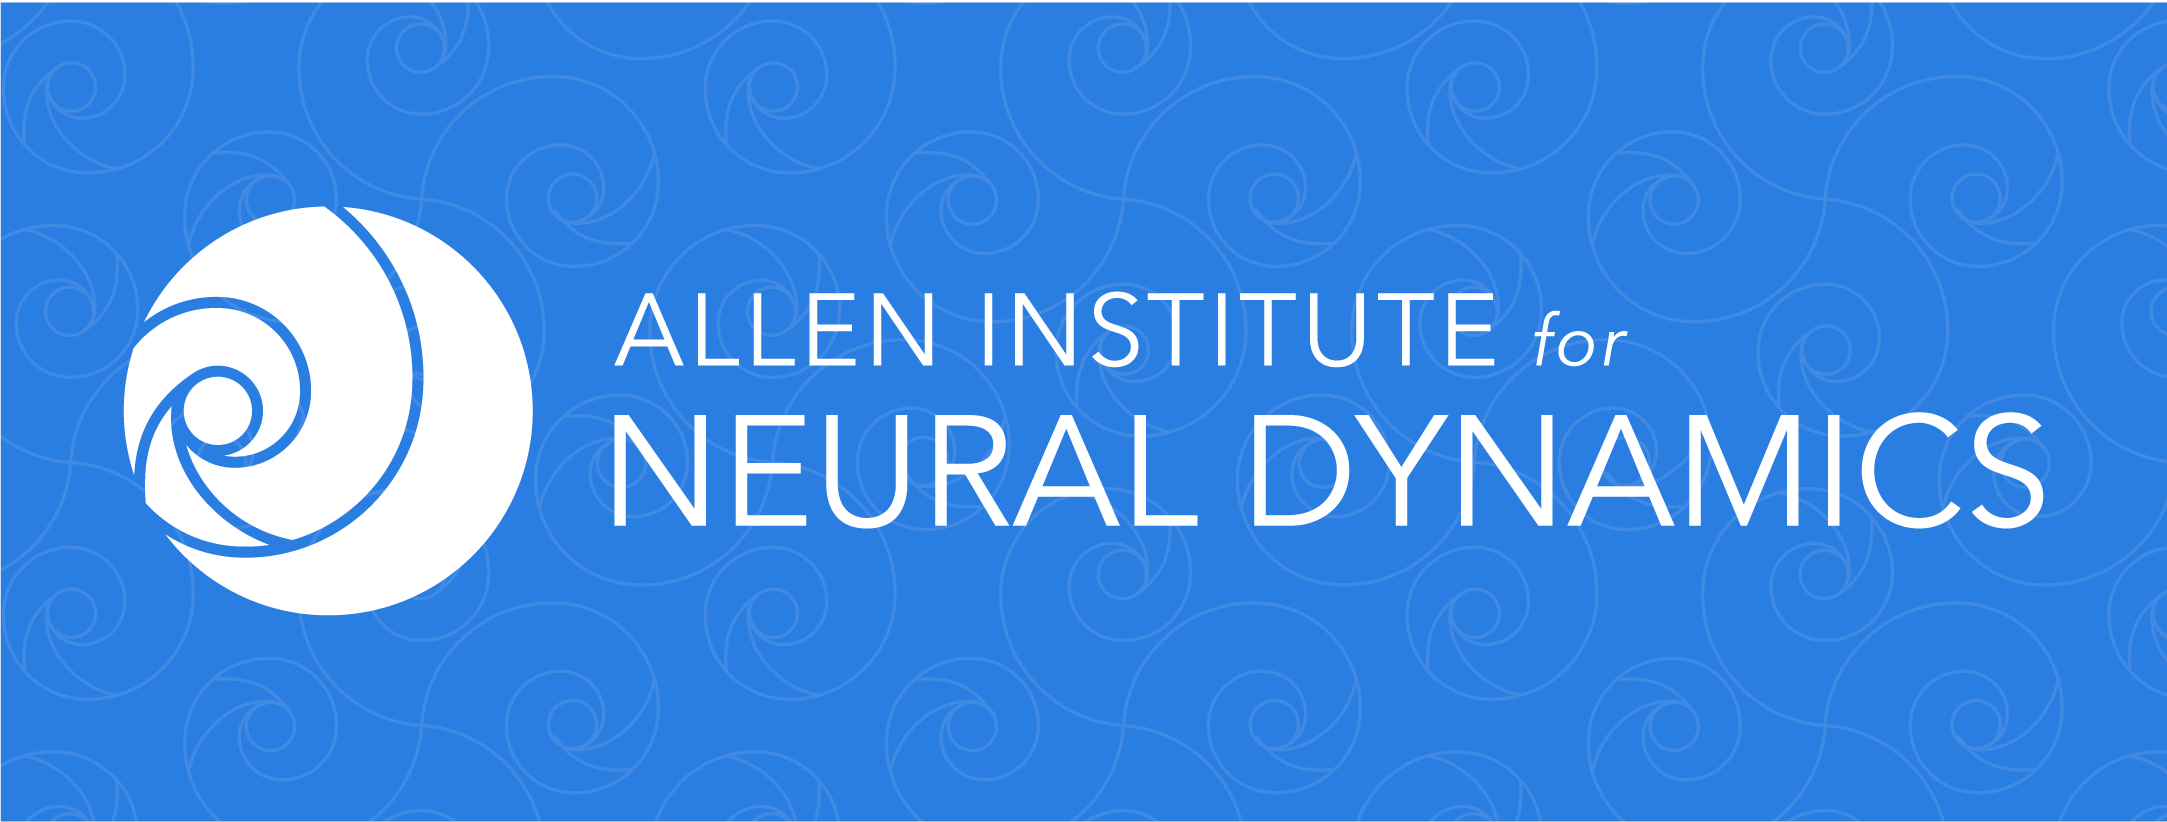 Allen Institute for Neural Dynamics Launch Event